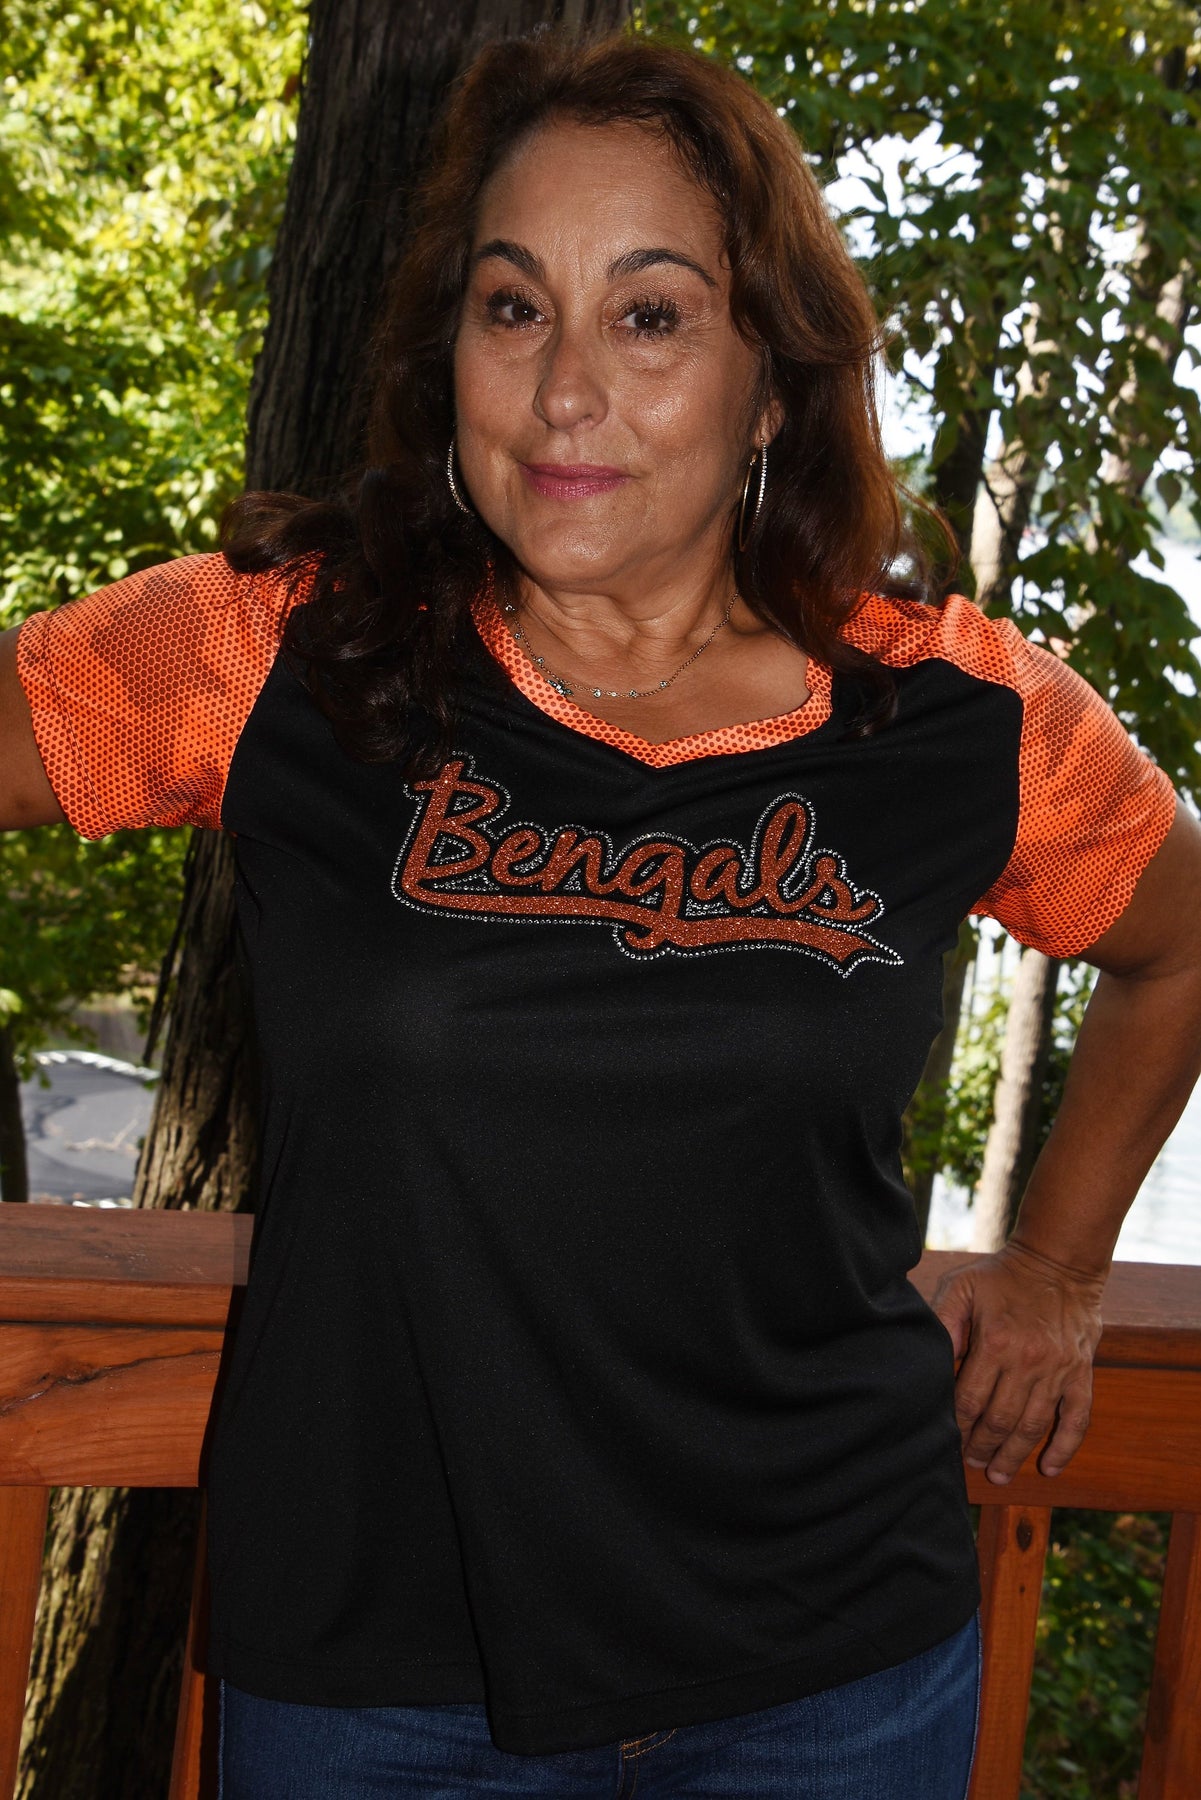 Carolina Bling Queen Bengals Orange and Black Rhinestone Glitter Bling Shirt, All Sizes XS, S, M, L, 4X 4X